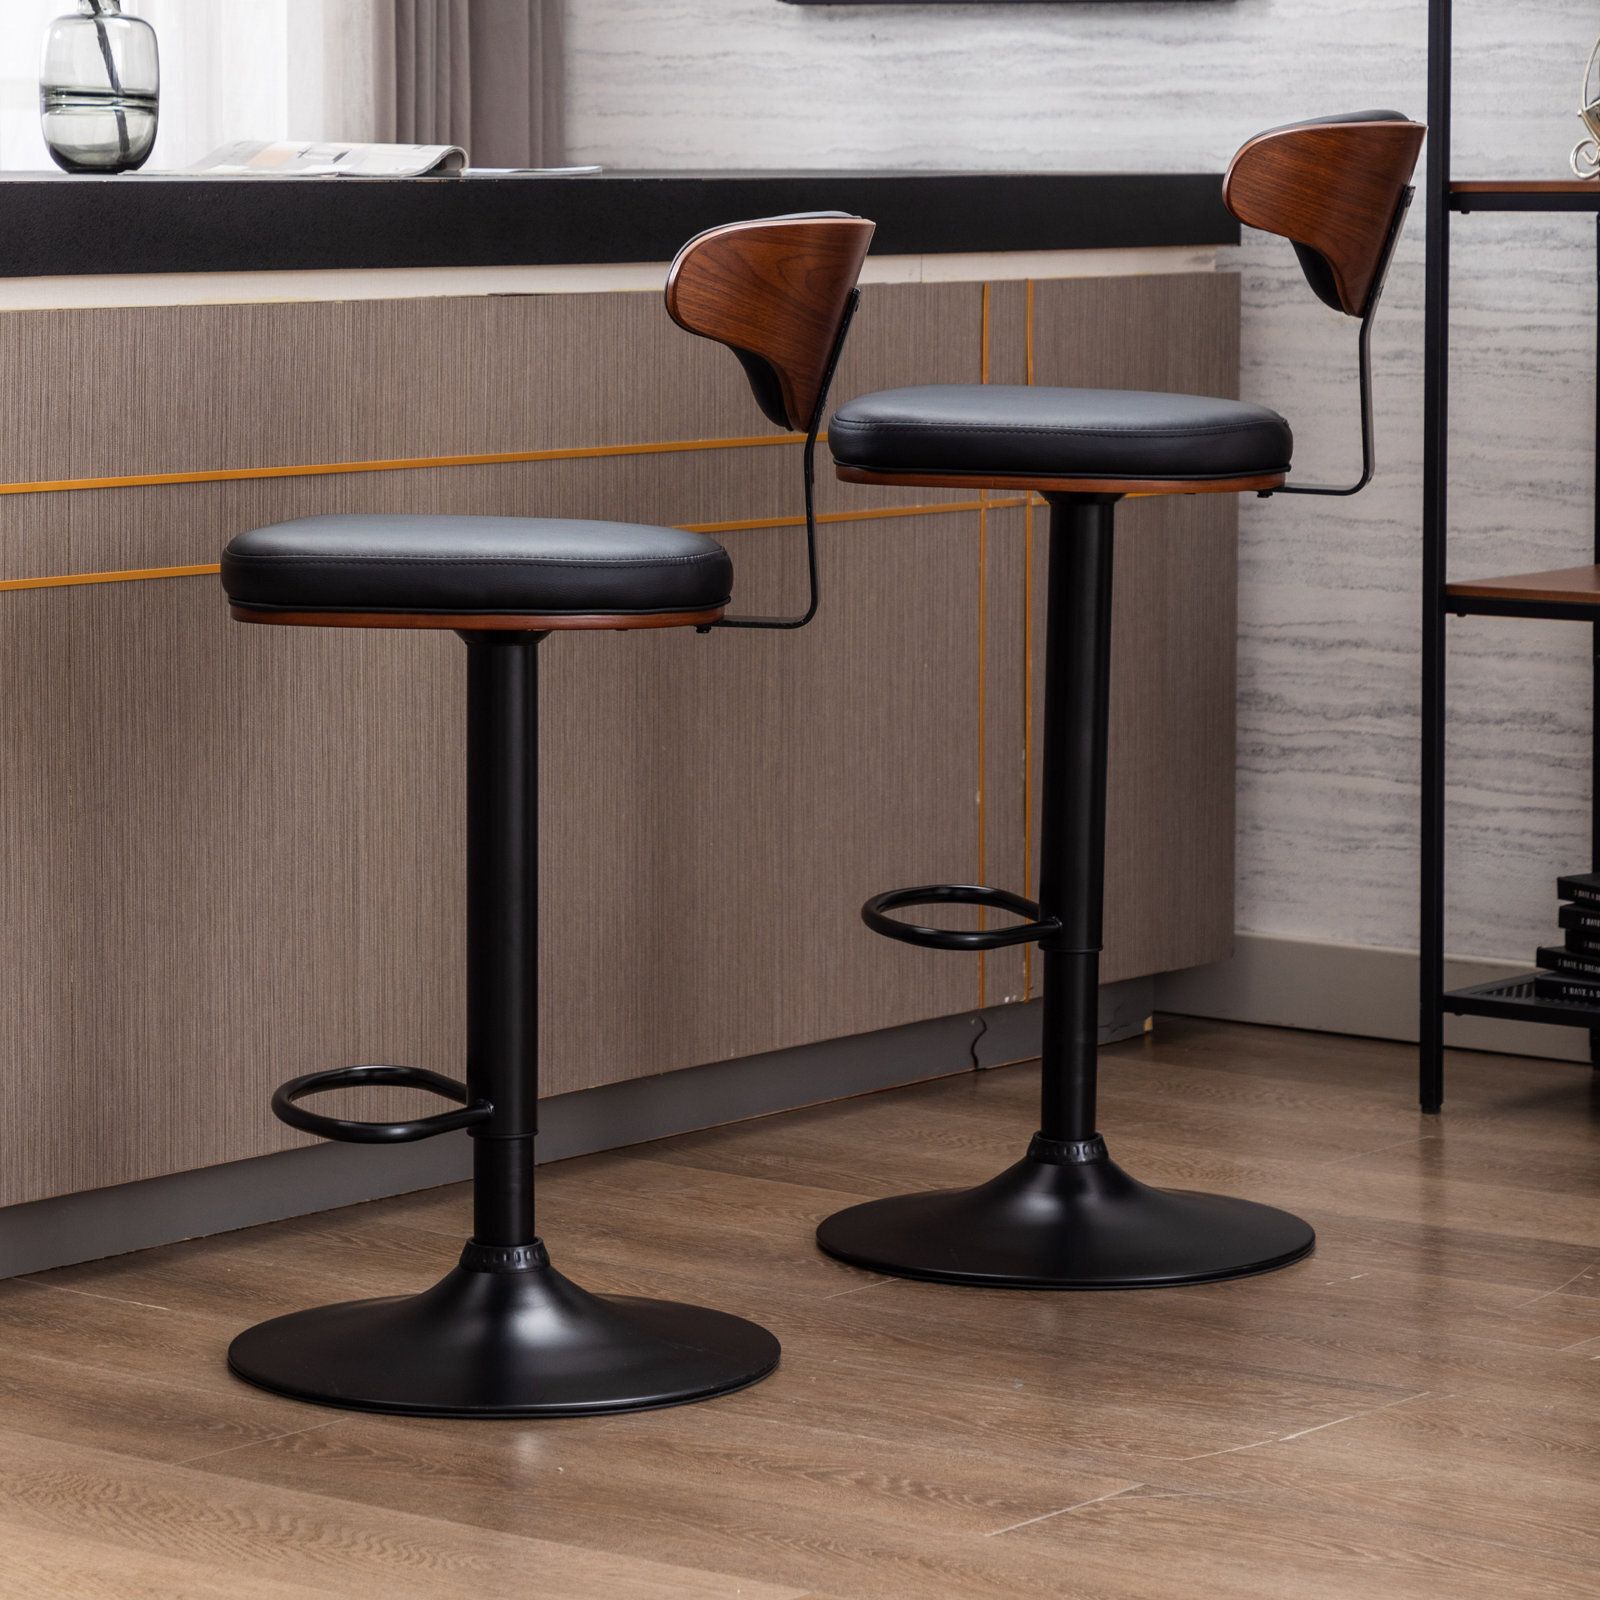 Adjustable bentwood bar stools